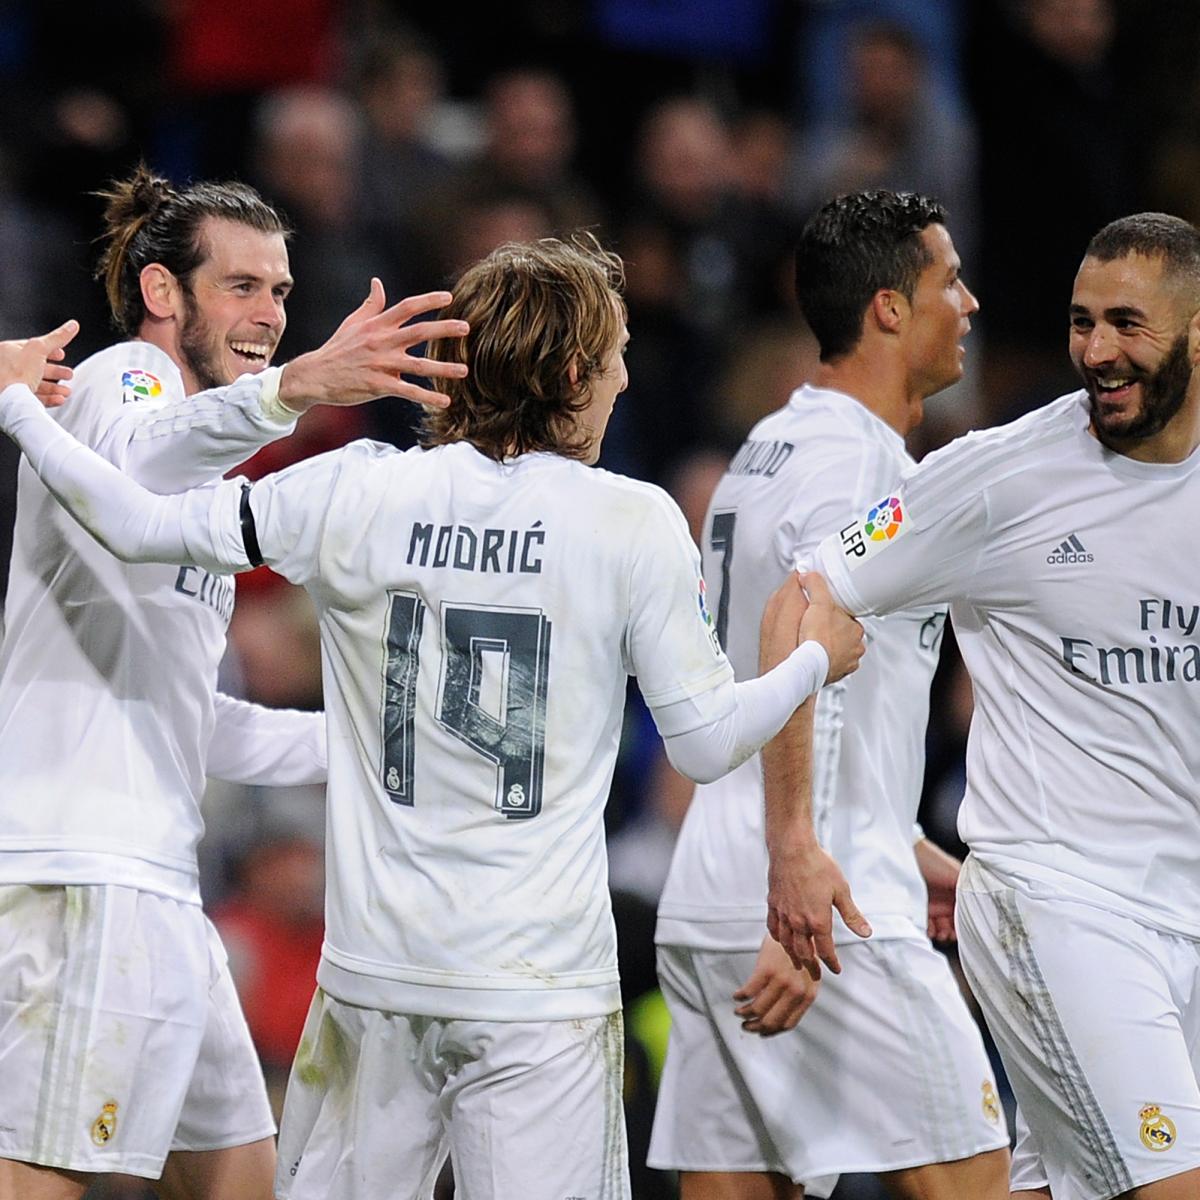 What would Gareth Bale's career look like if he and Modric had